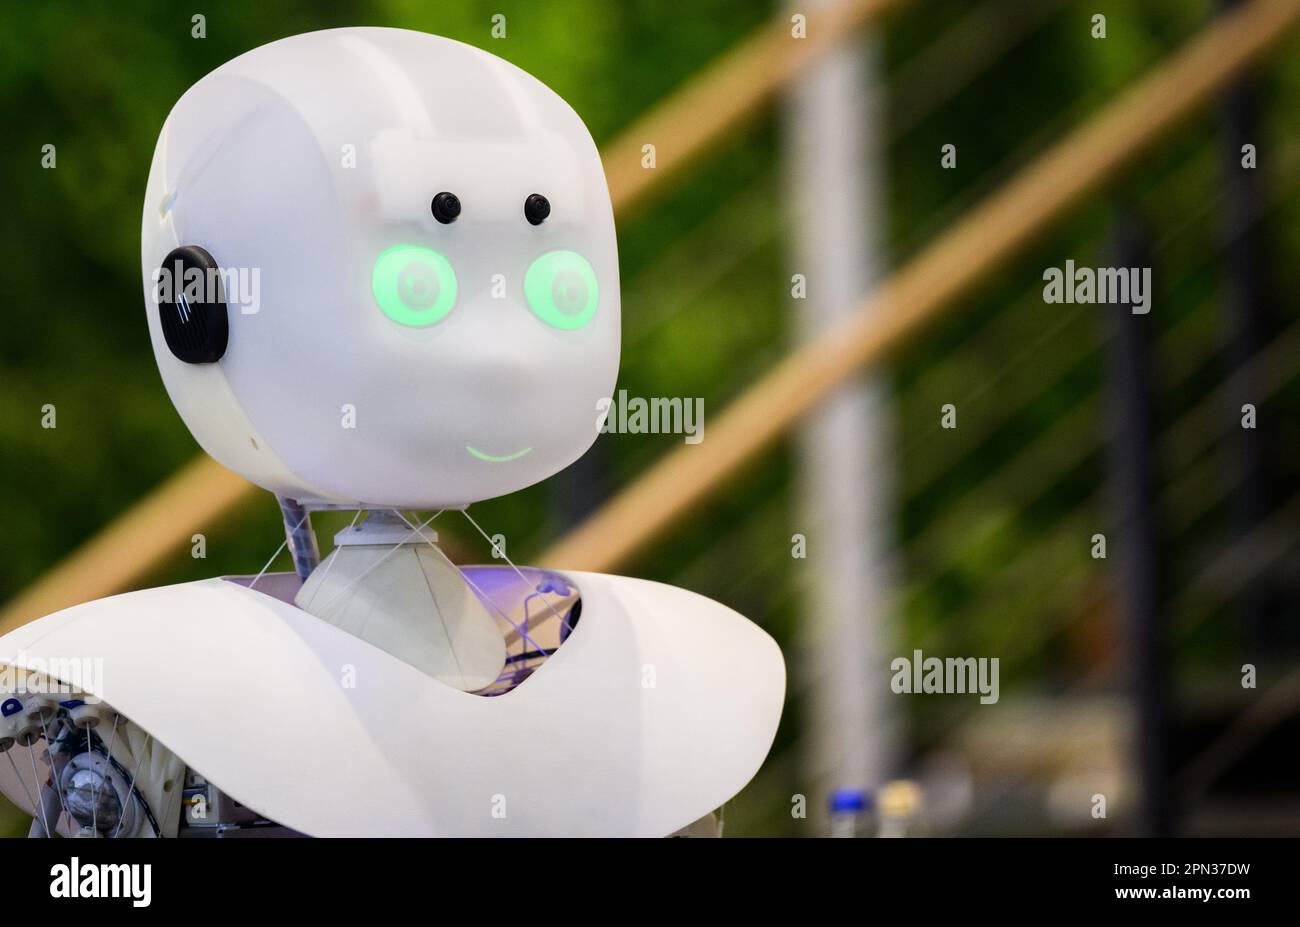 Des robots télécommandés en VR assisteront les employés des